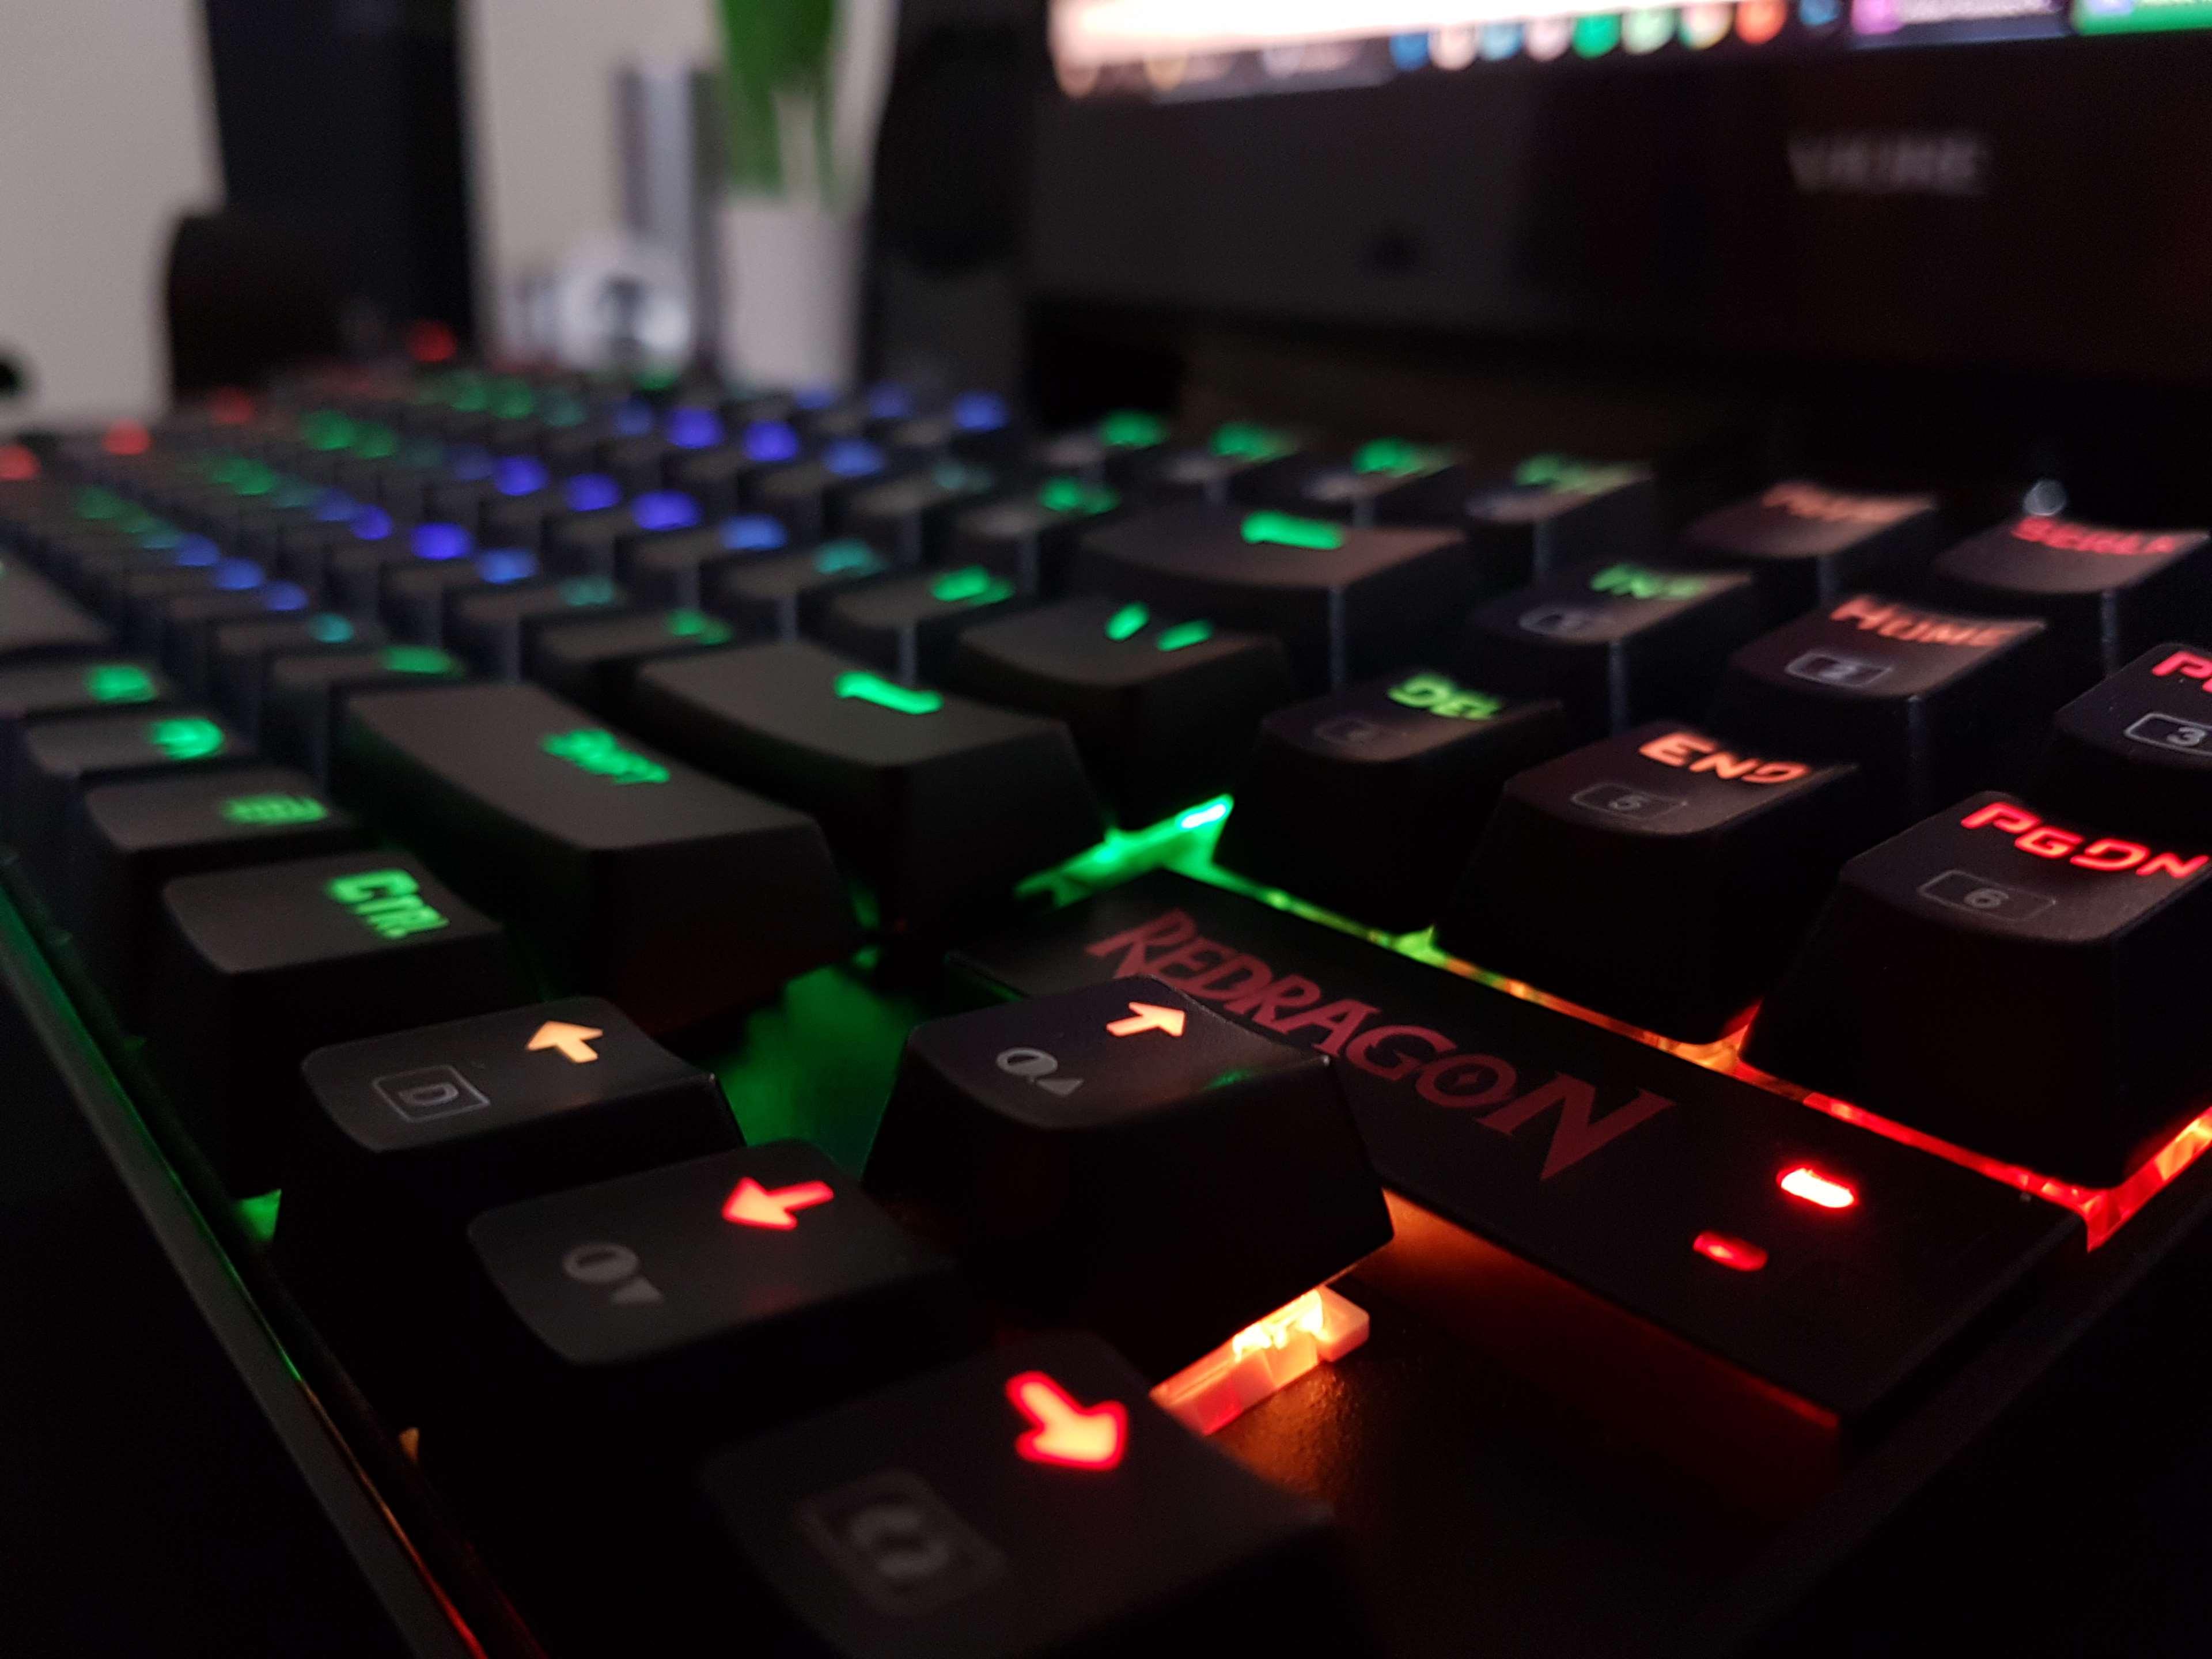 Backlight, Computer Keyboard, Gamer, Gaming, Mechanic, Gaming